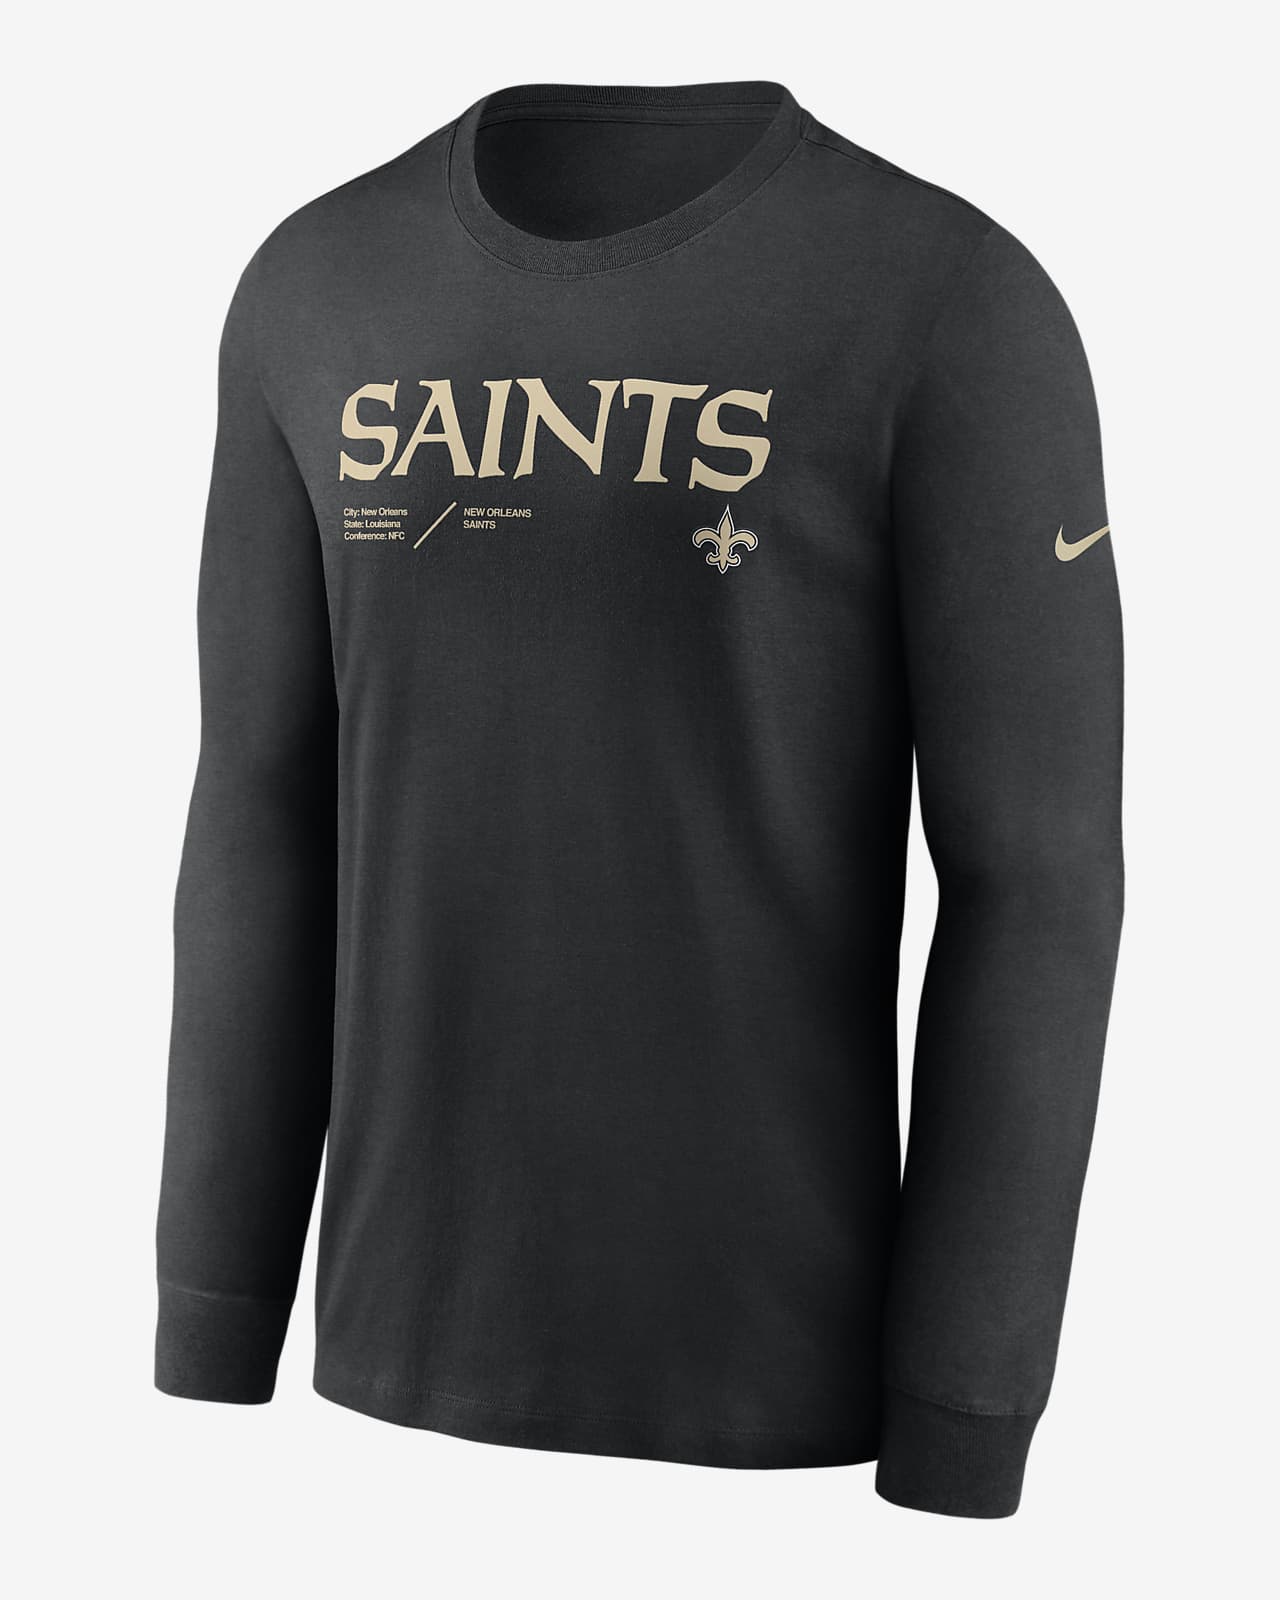 long sleeve saints jersey